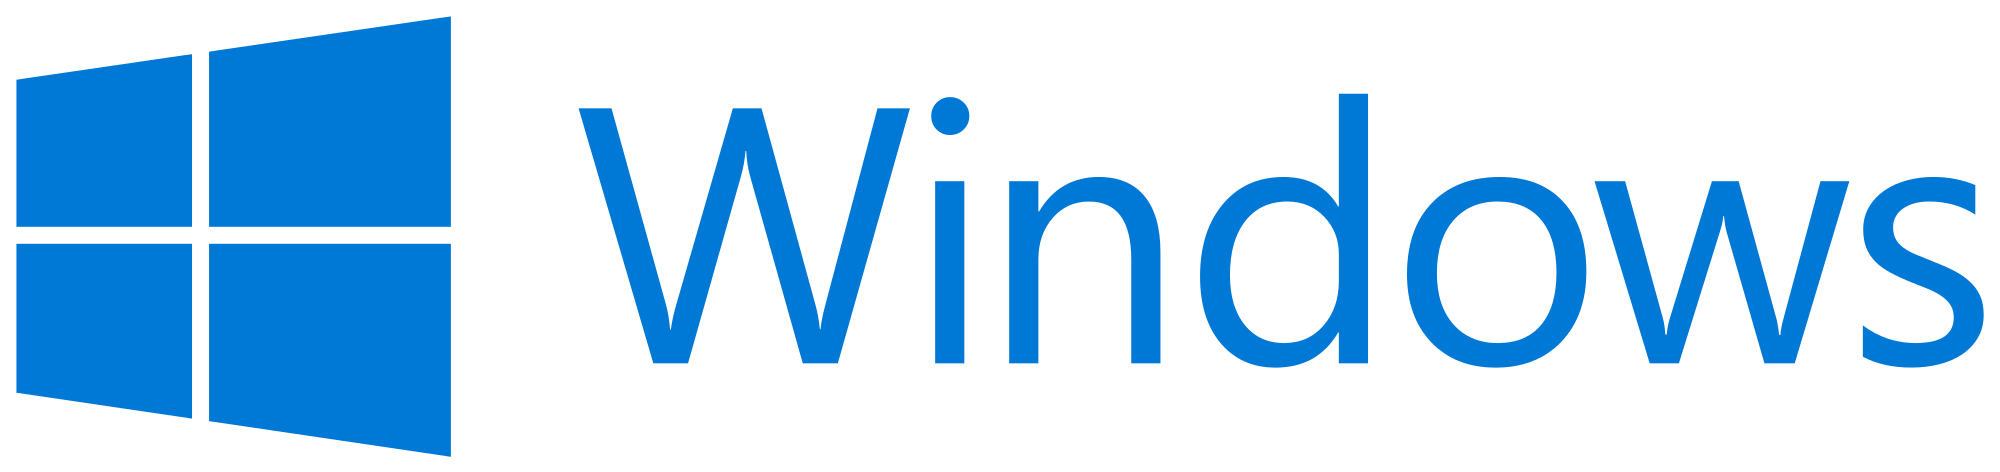 Microsoft Windows Transparent Background